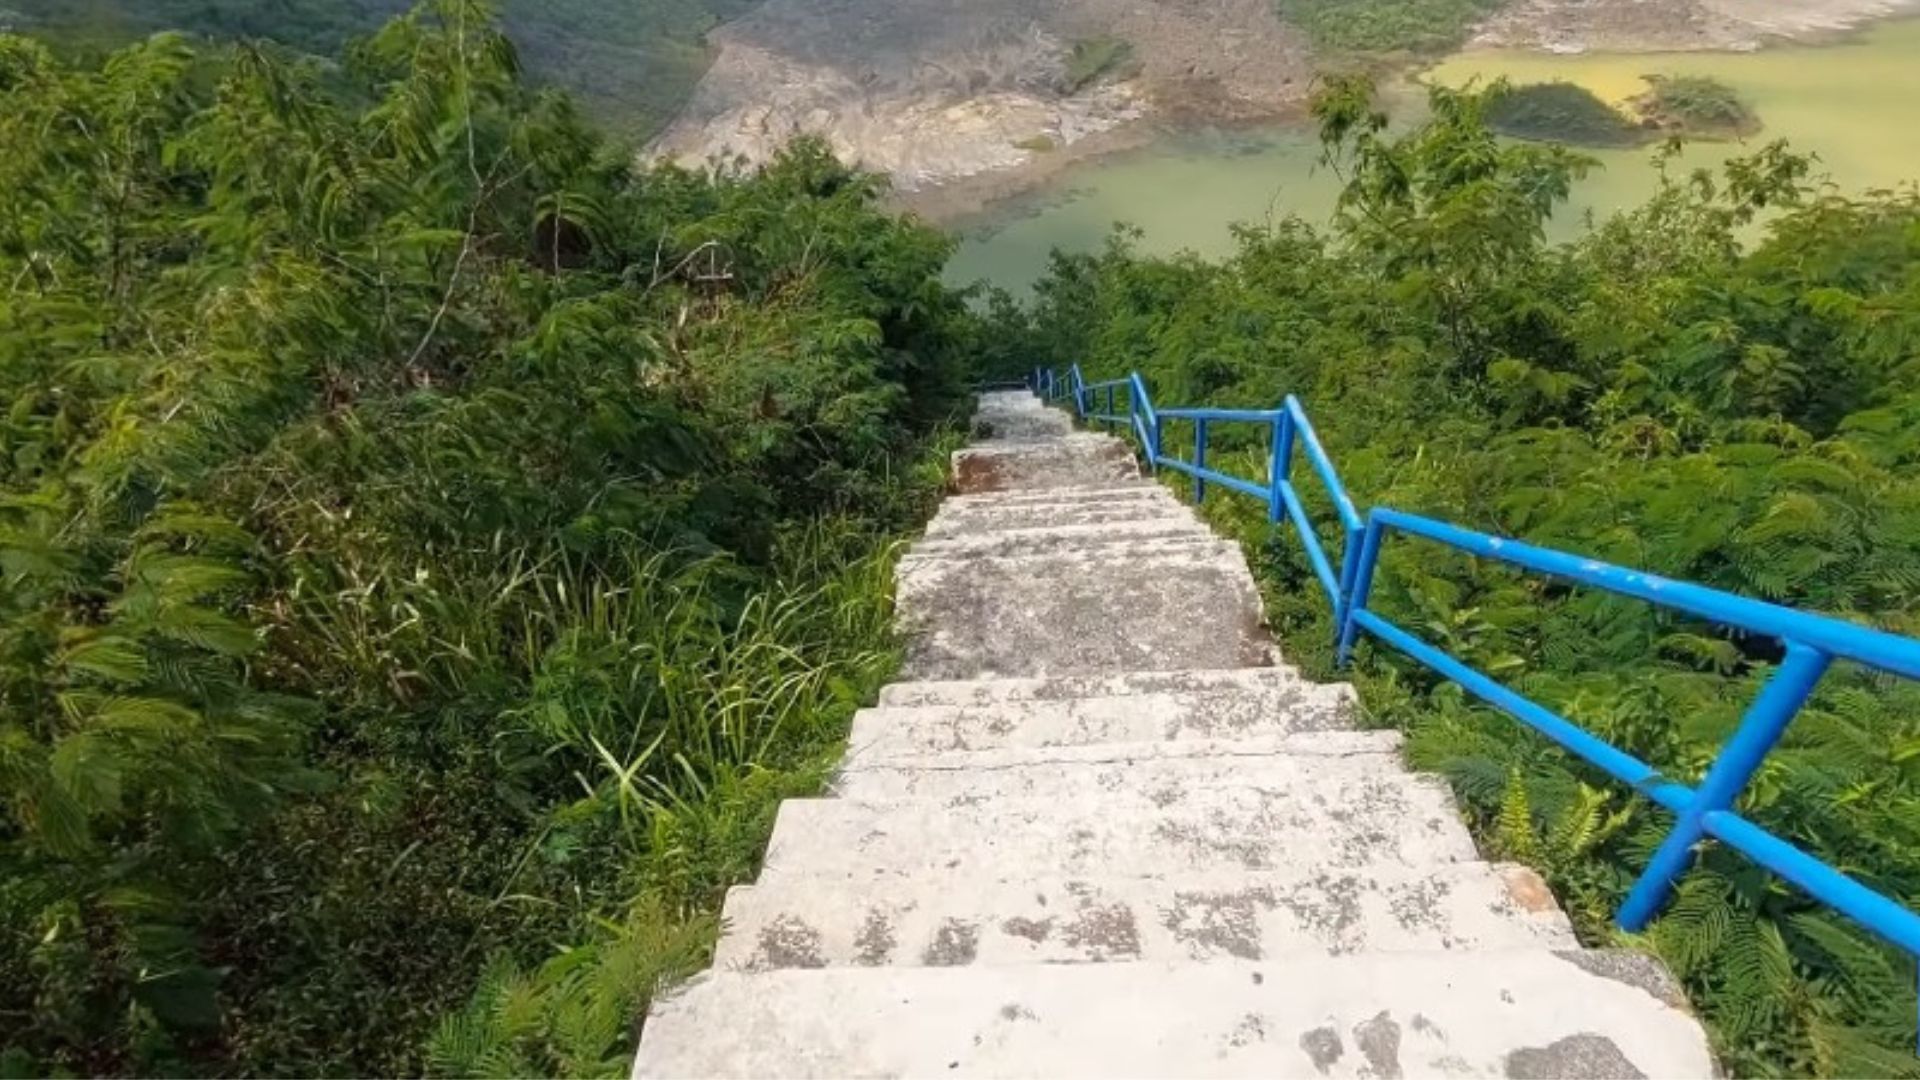 Menaiki anak tangga kuning menuju puncak wisata alam Tasikmalaya, Gunung Galunggung.